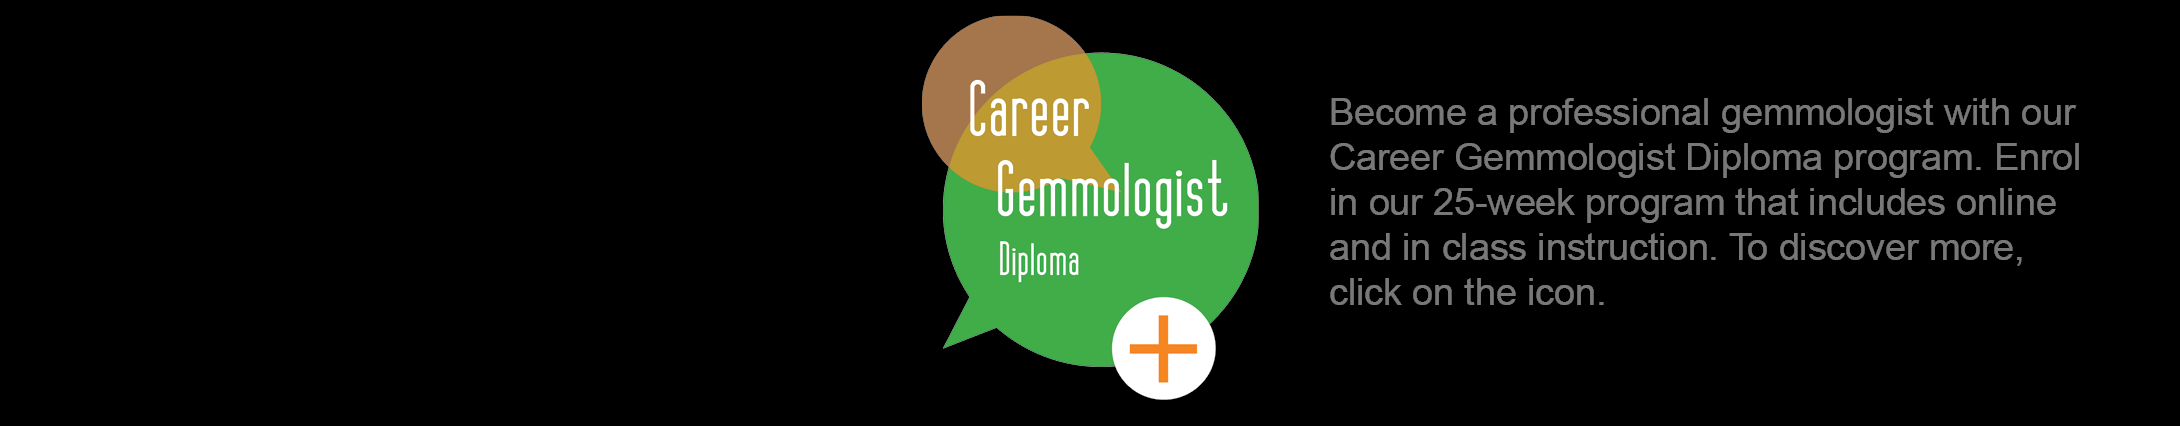 Career Gemmologist Learn More